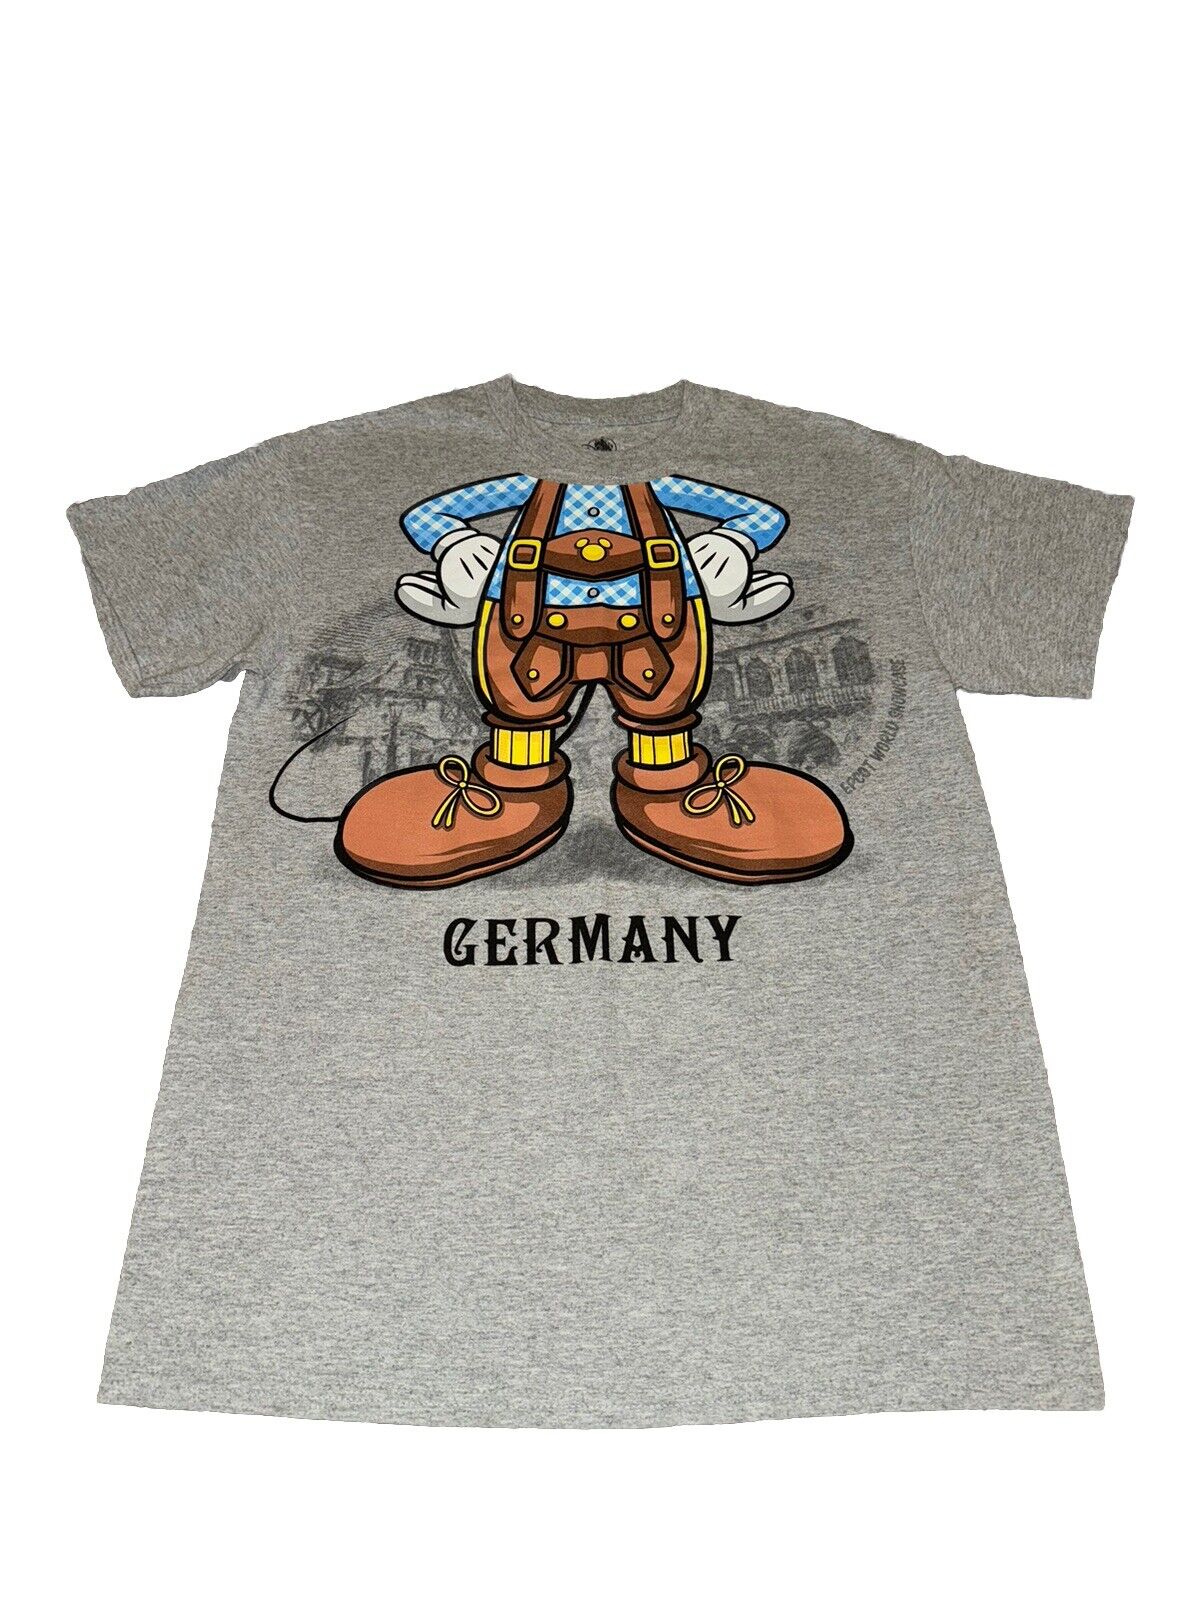 Disney World Epcot Germany Mickey Mouse Lederhosen T-Shirt Adult Medium